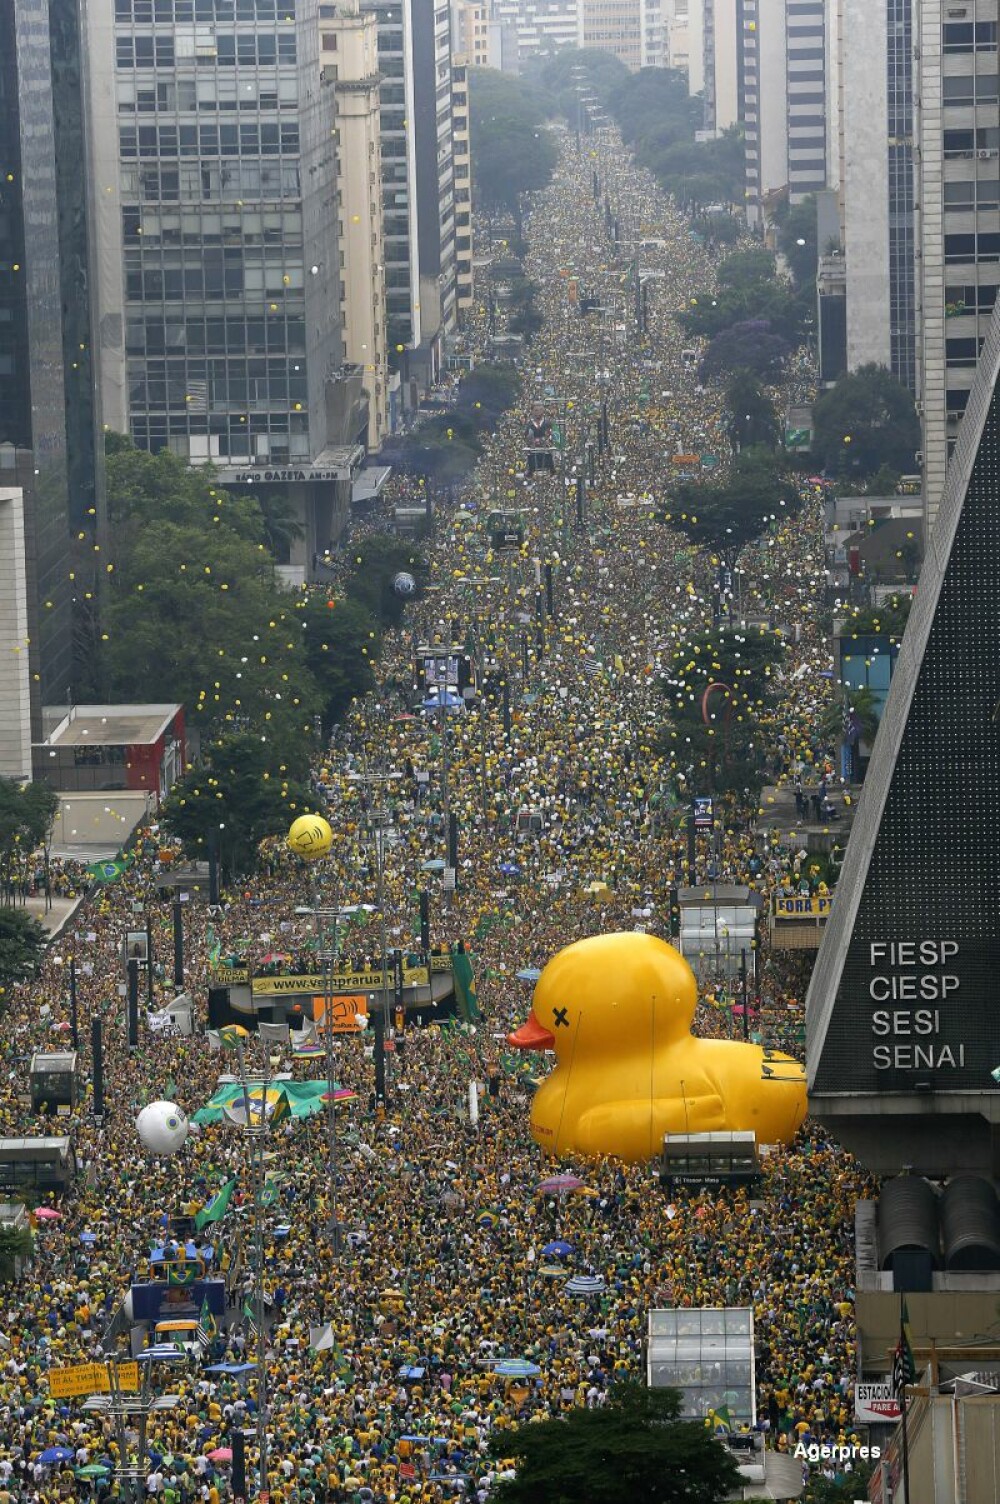 Manifestatii de proportii istorice impotriva presedintei in Brazilia. 1.4 milioane de oameni au iesit in strada. FOTO - Imaginea 1